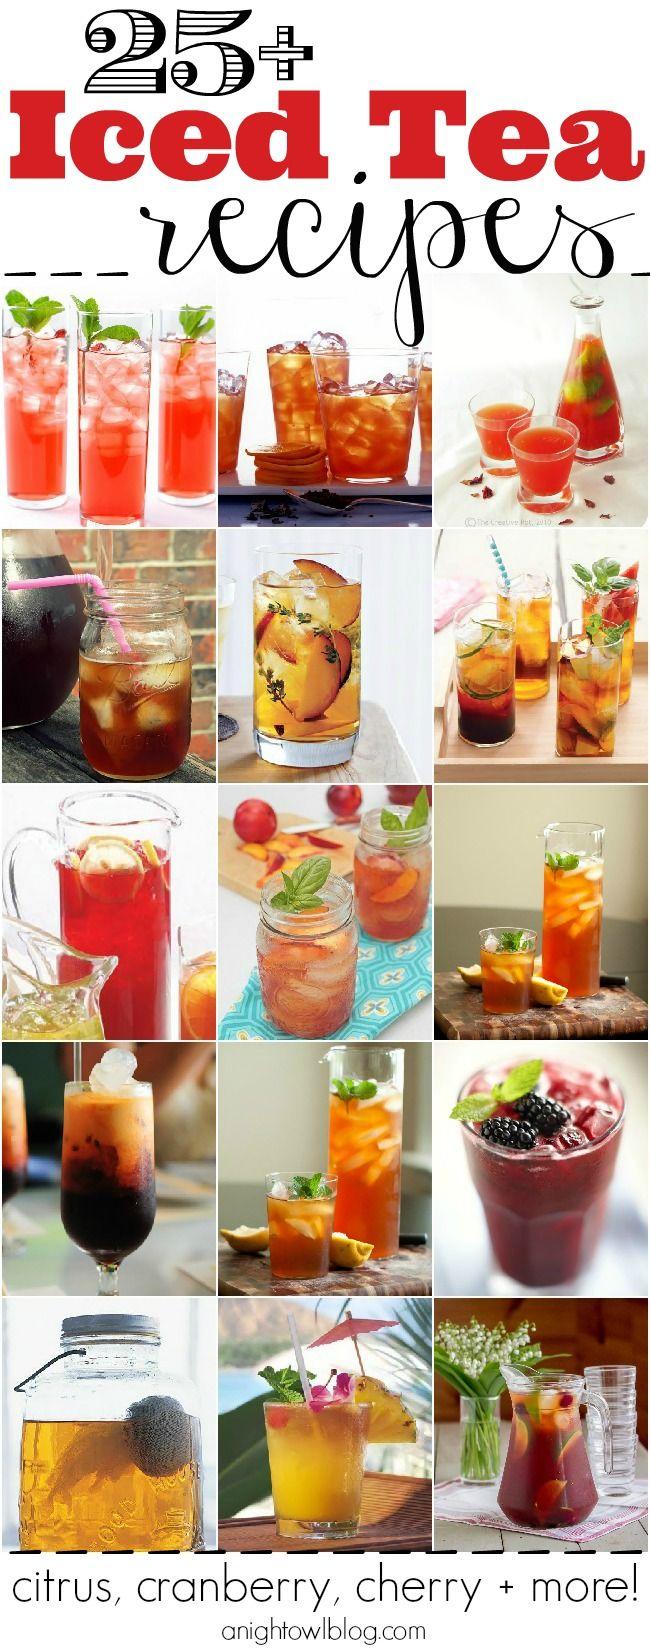 Wedding - 25 Iced Tea Recipes - Citrus, Cranberry, Cherry And More!